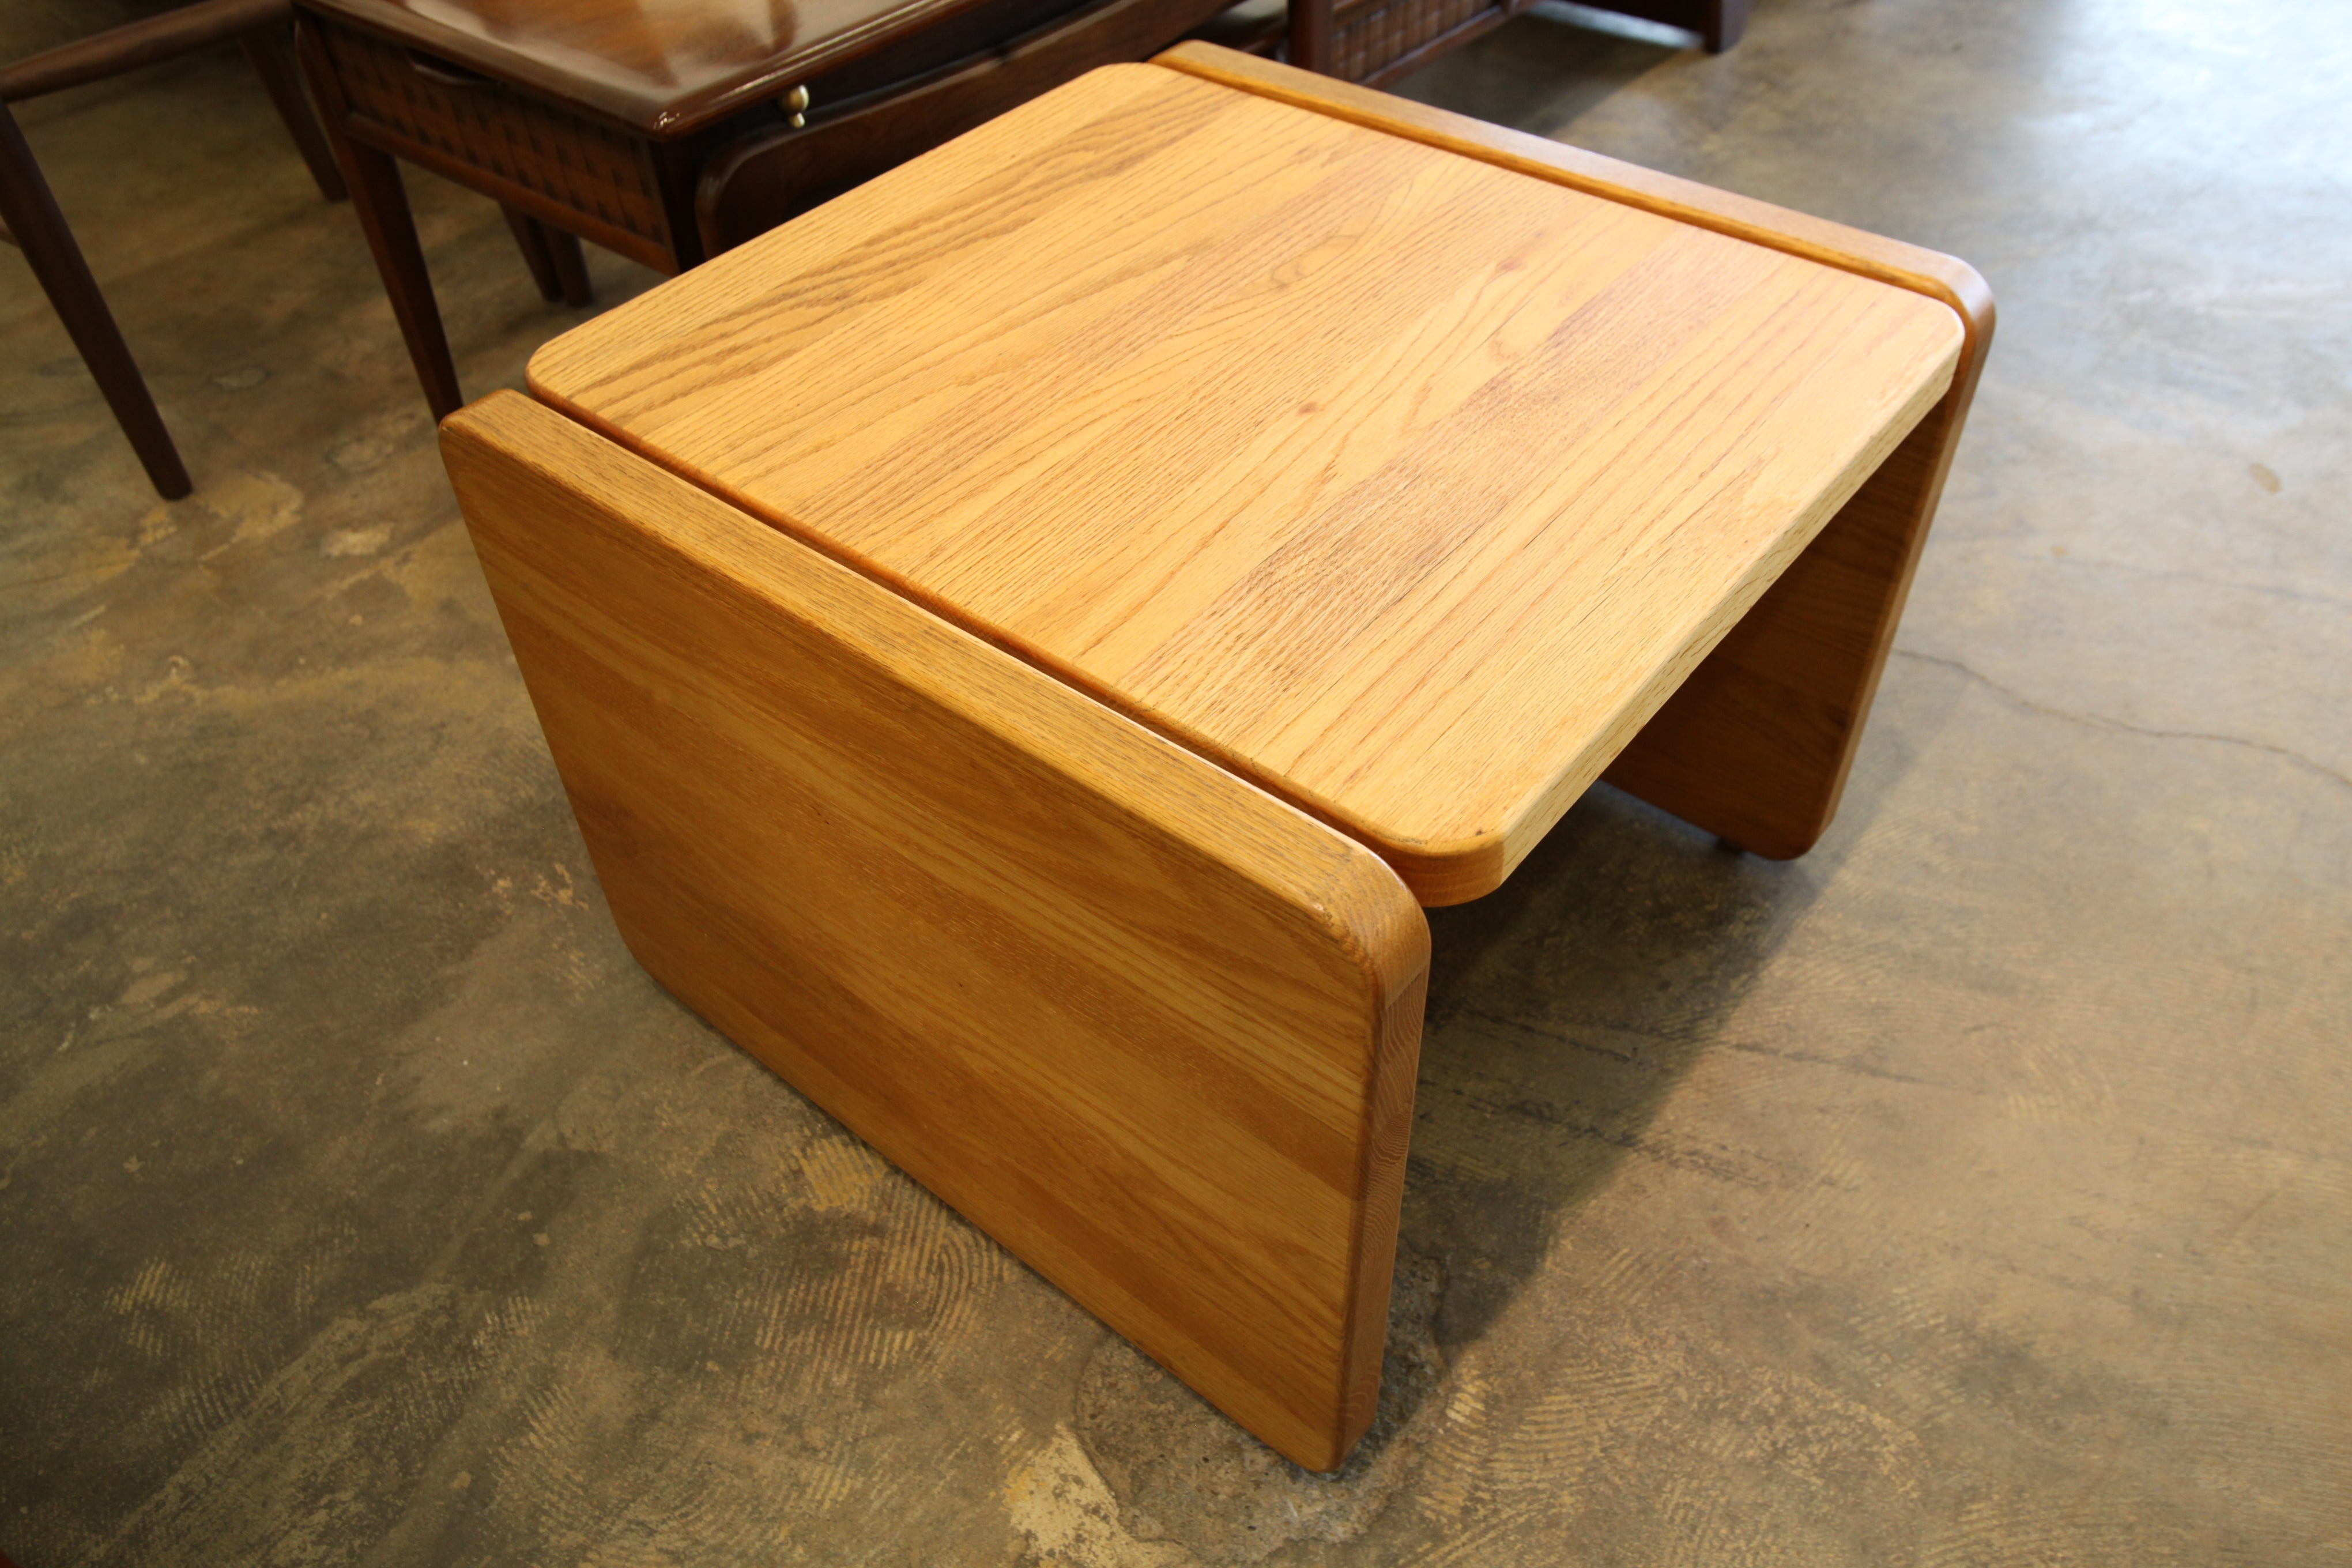 Vintage Solid Oak Side Table (24" x 23.5" x 18"H)